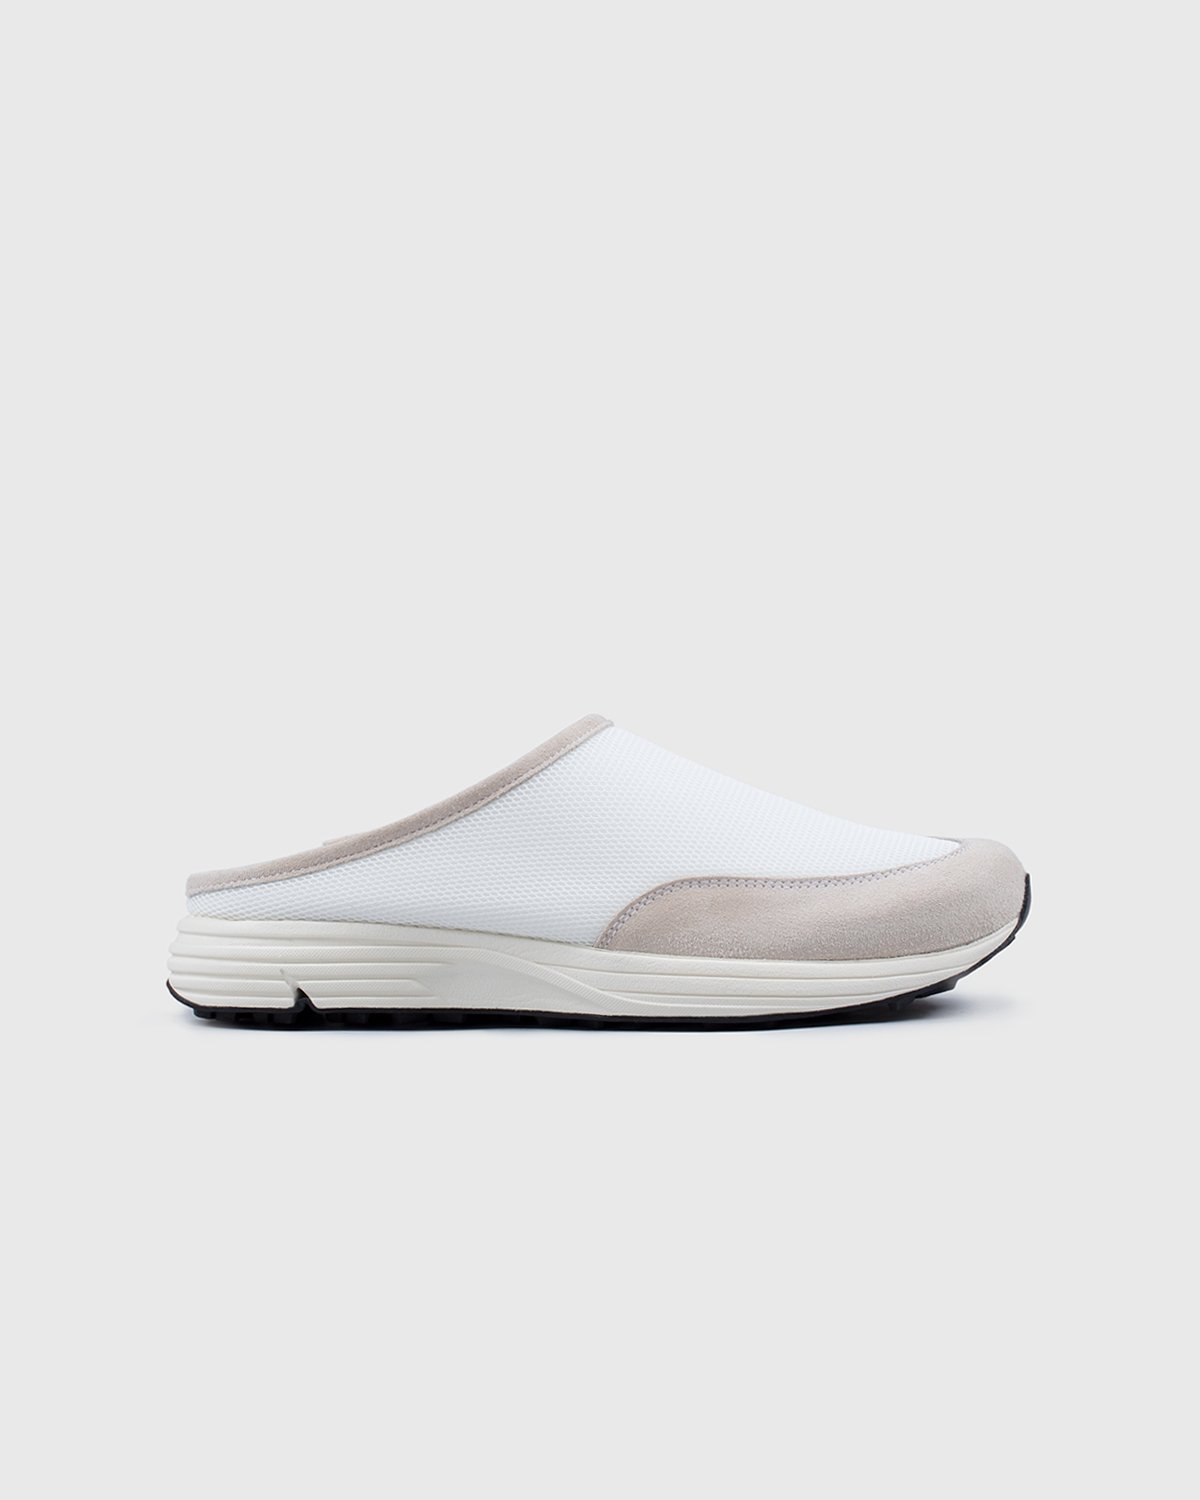 Diemme - Maggiore White Mesh - Footwear - White - Image 1